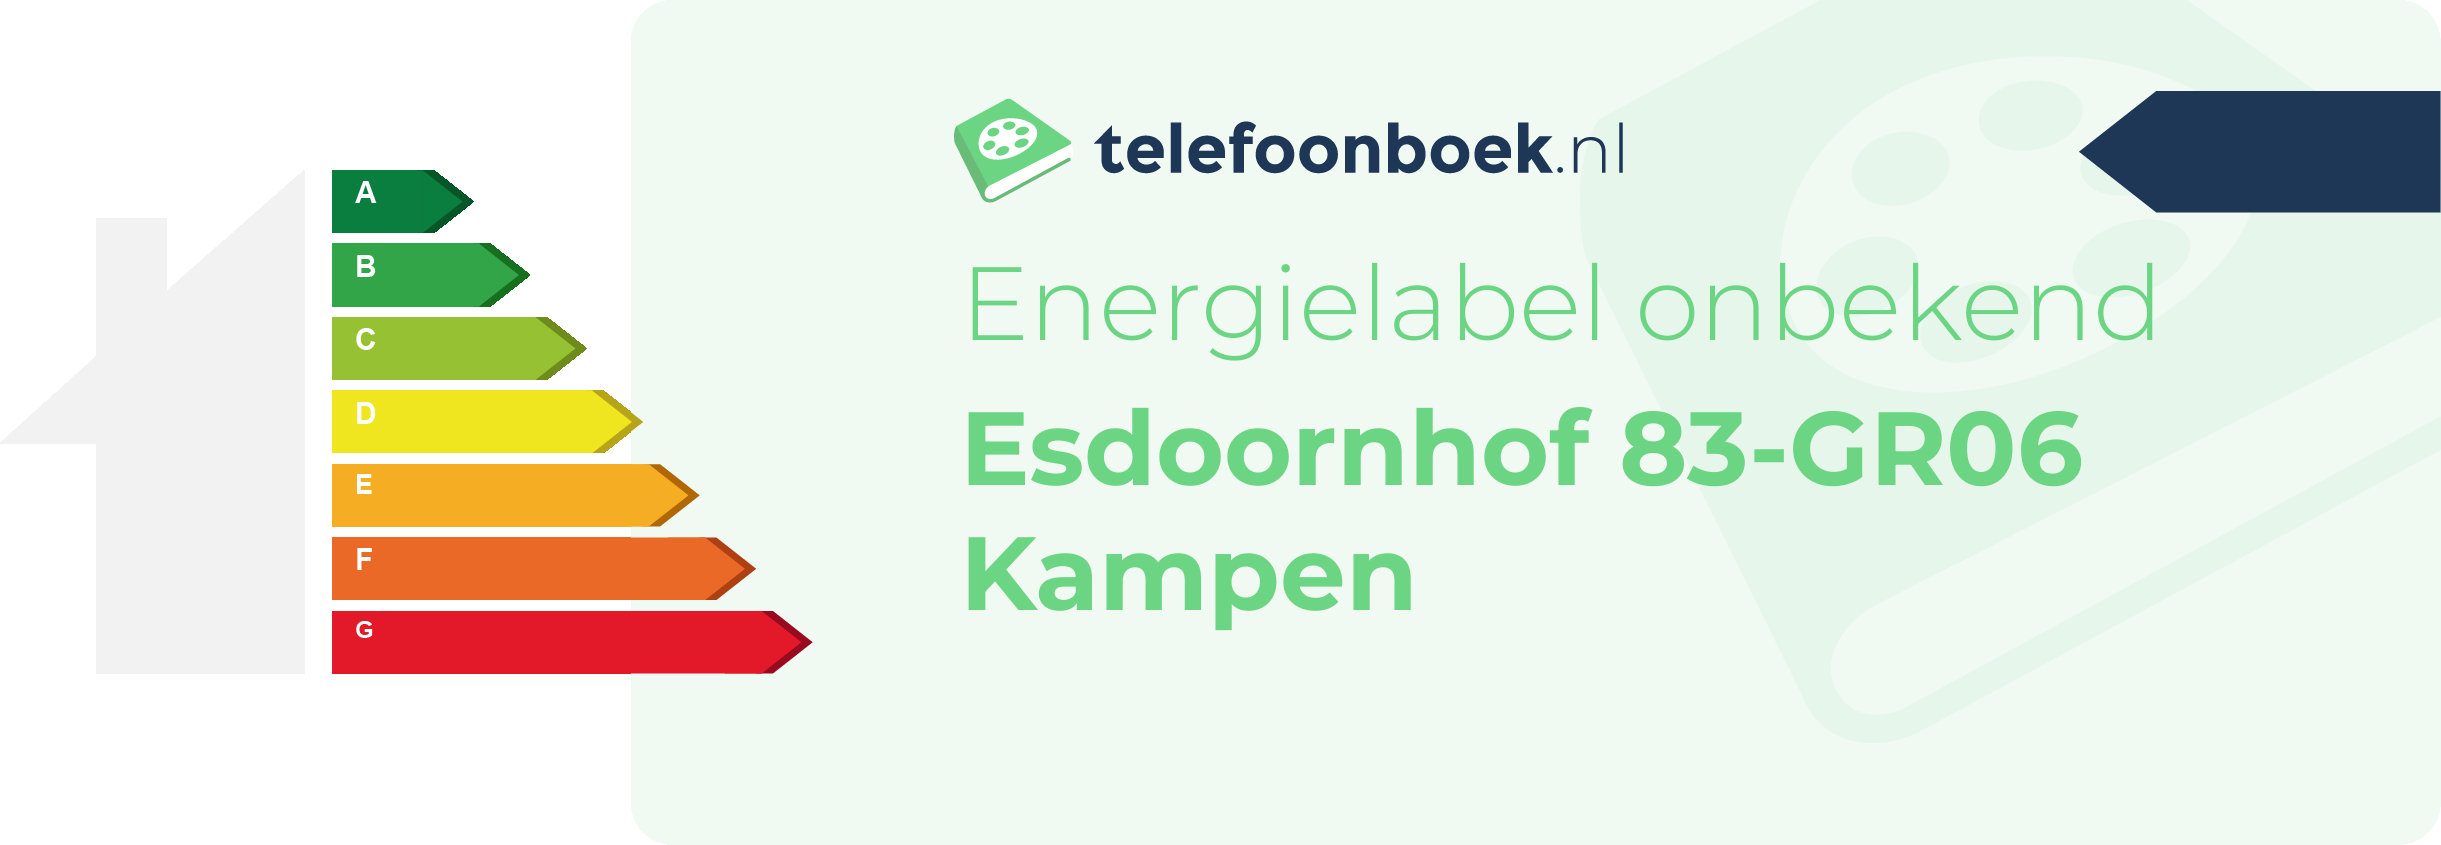 Energielabel Esdoornhof 83-GR06 Kampen